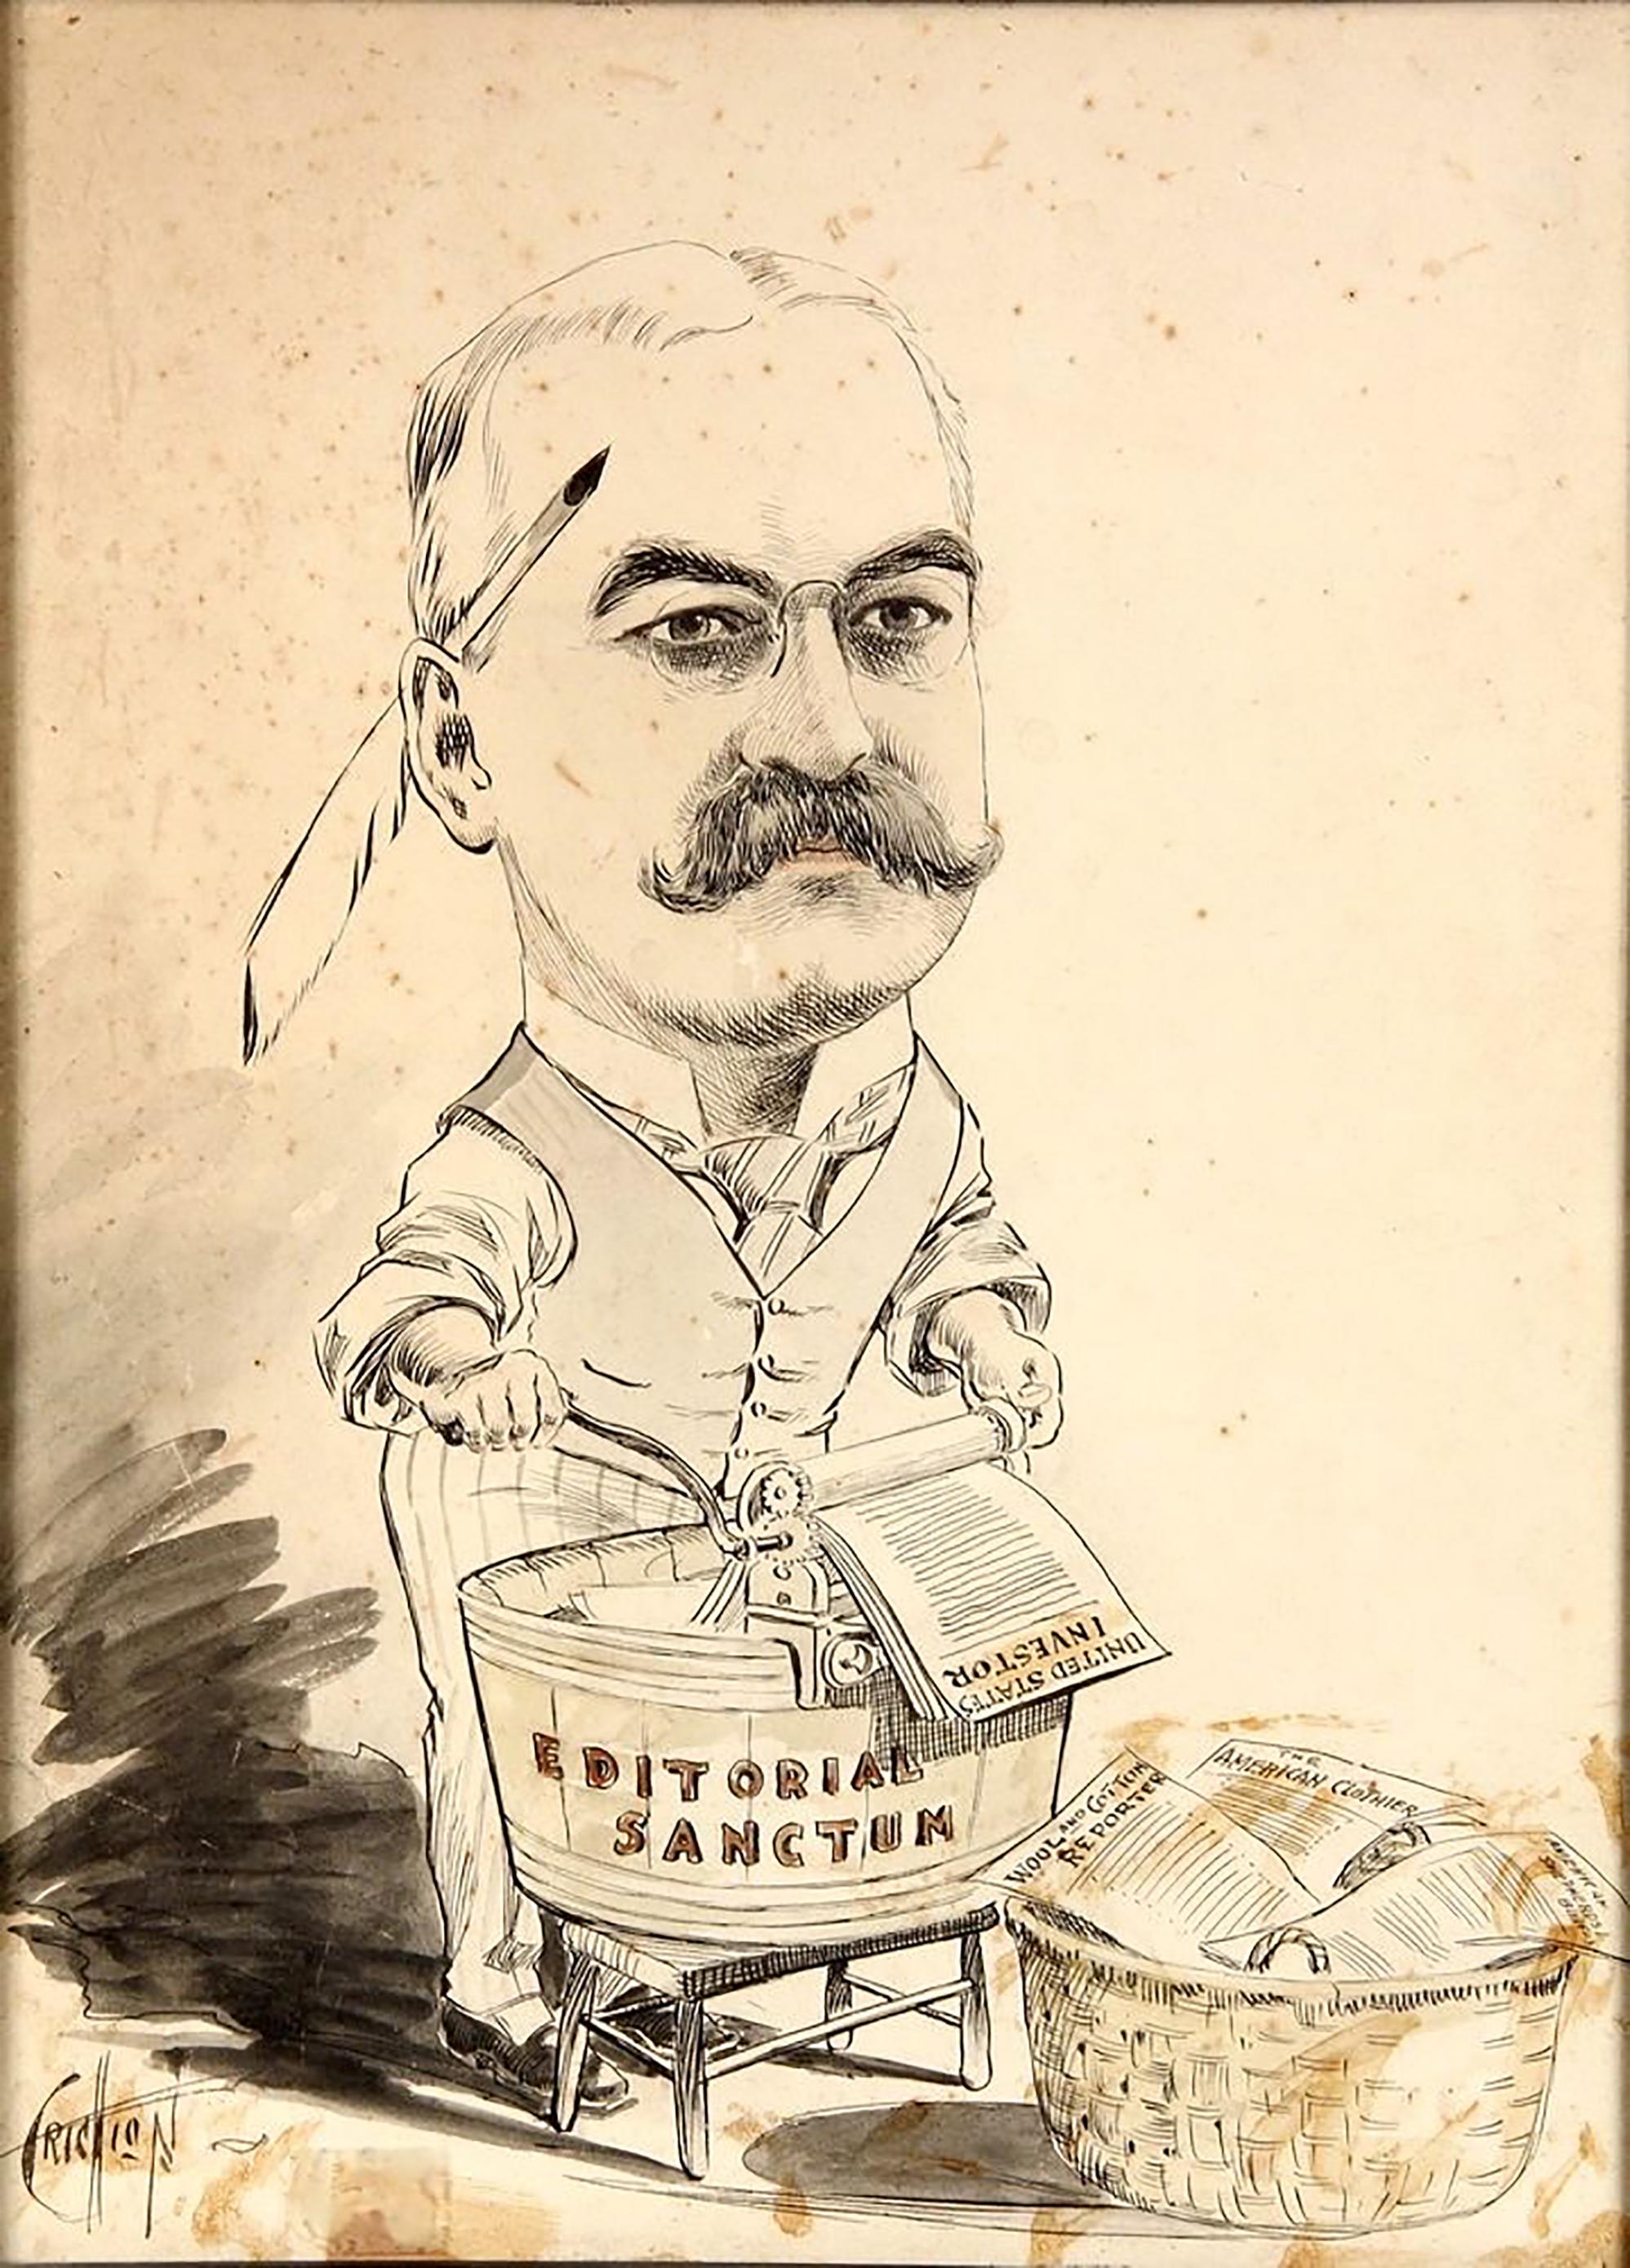 1890 Political Cartoon by "Crichton" of Michael Henry de Young